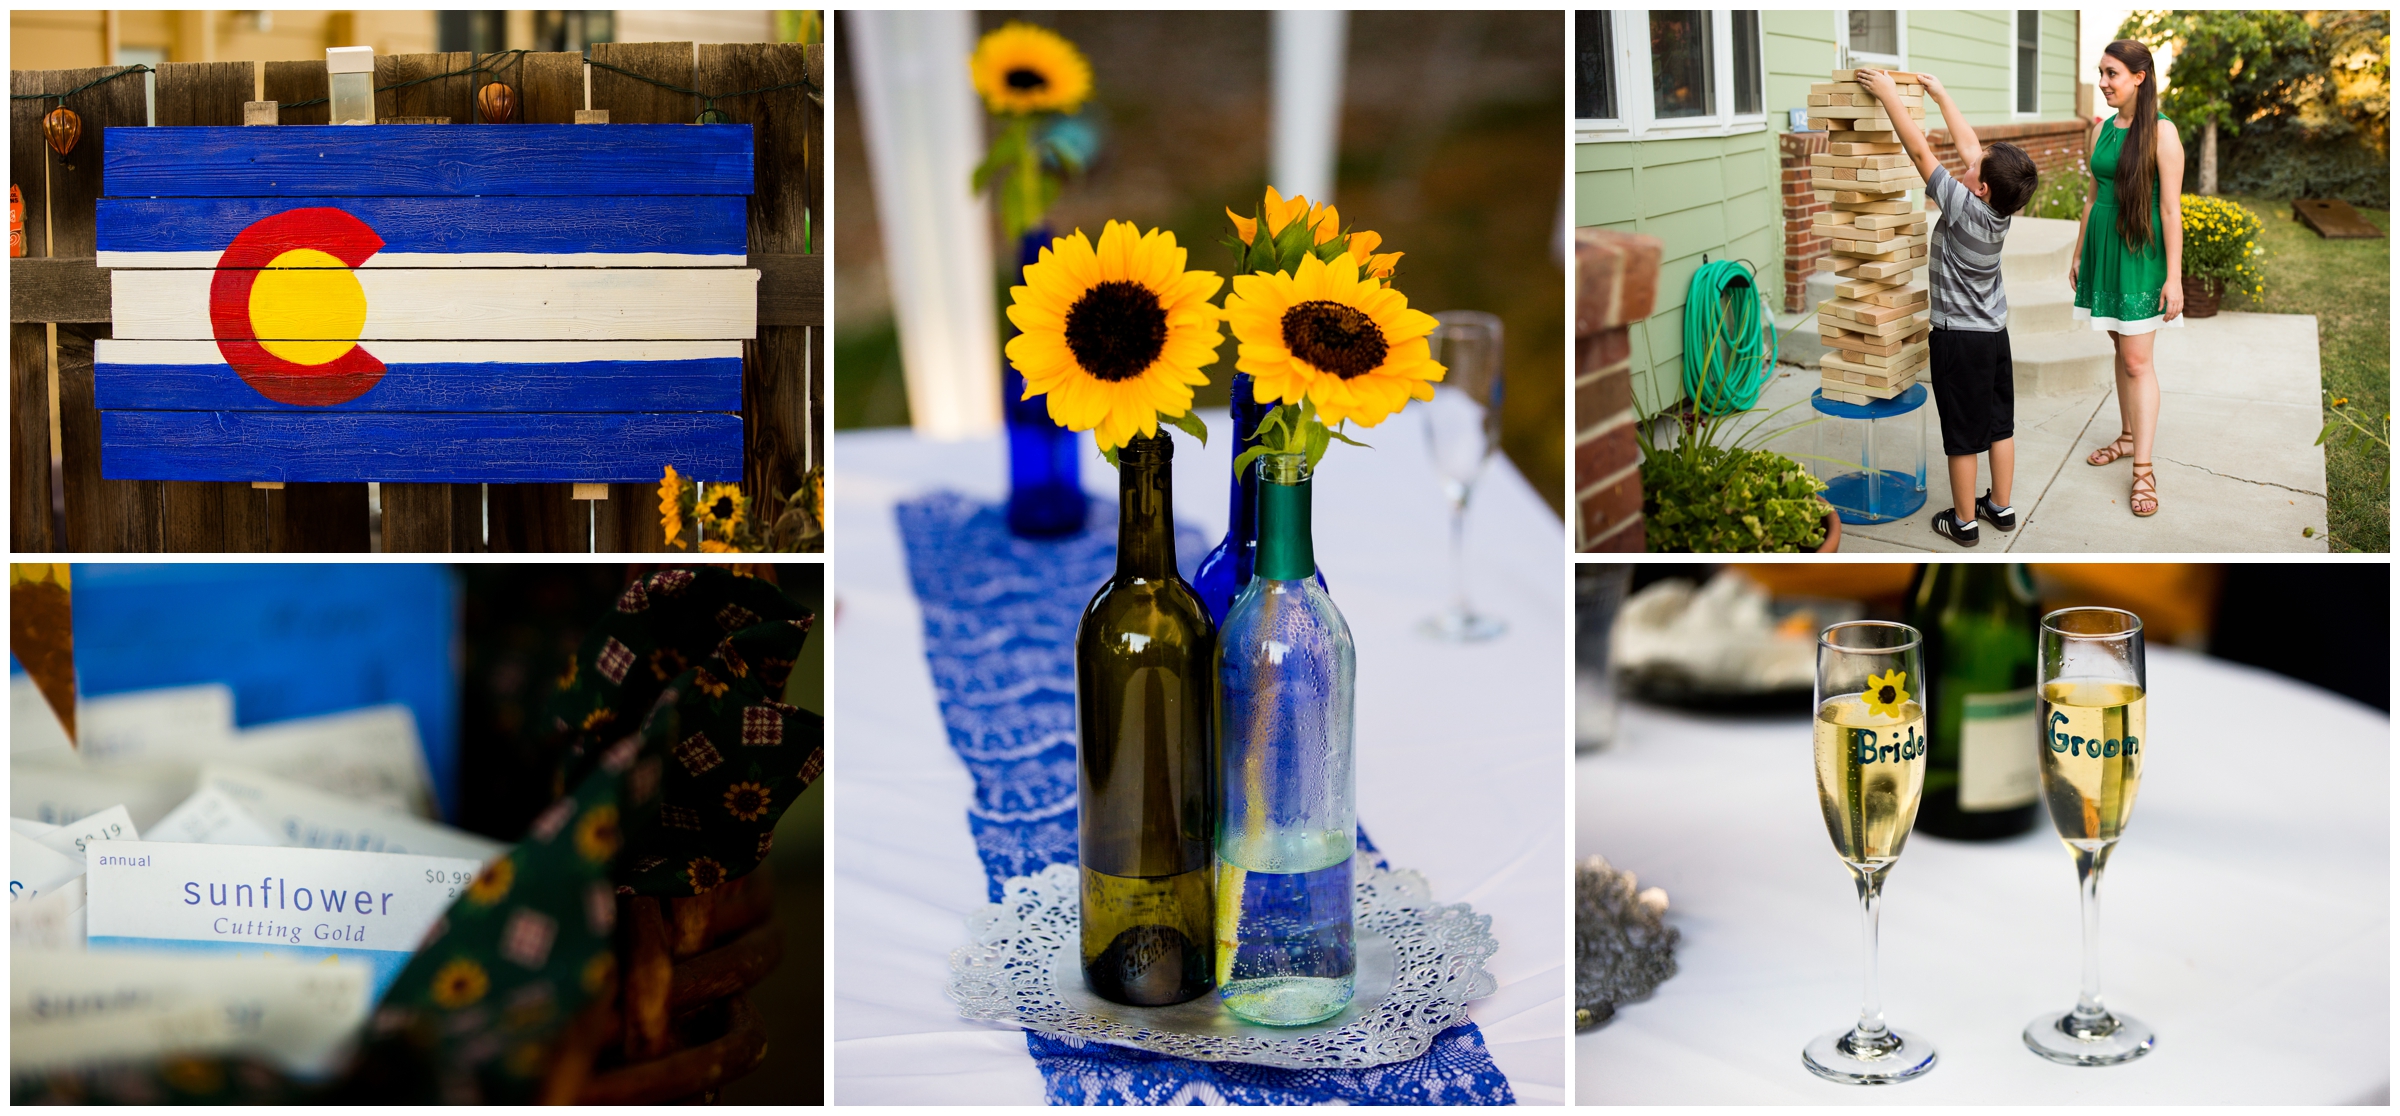 DIY wedding sunflower centerpieces at Colorado backyard wedding 